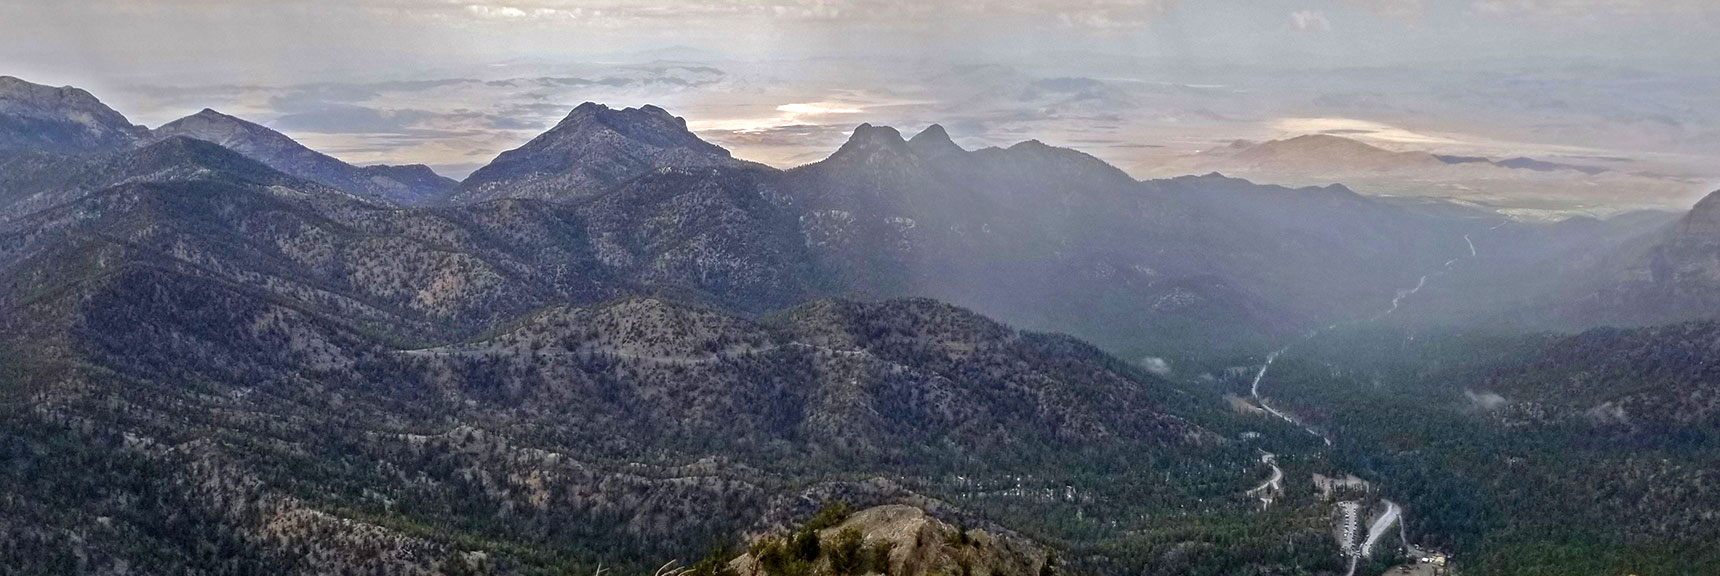 Macks Peak, Sisters South, North and Black Rock Sister, Lee Canyon, Bristlecone Pine Trail | Lee Peak Summit via Lee Canyon Mid Ridge | Mt. Charleston Wilderness | Spring Mountains, Nevada